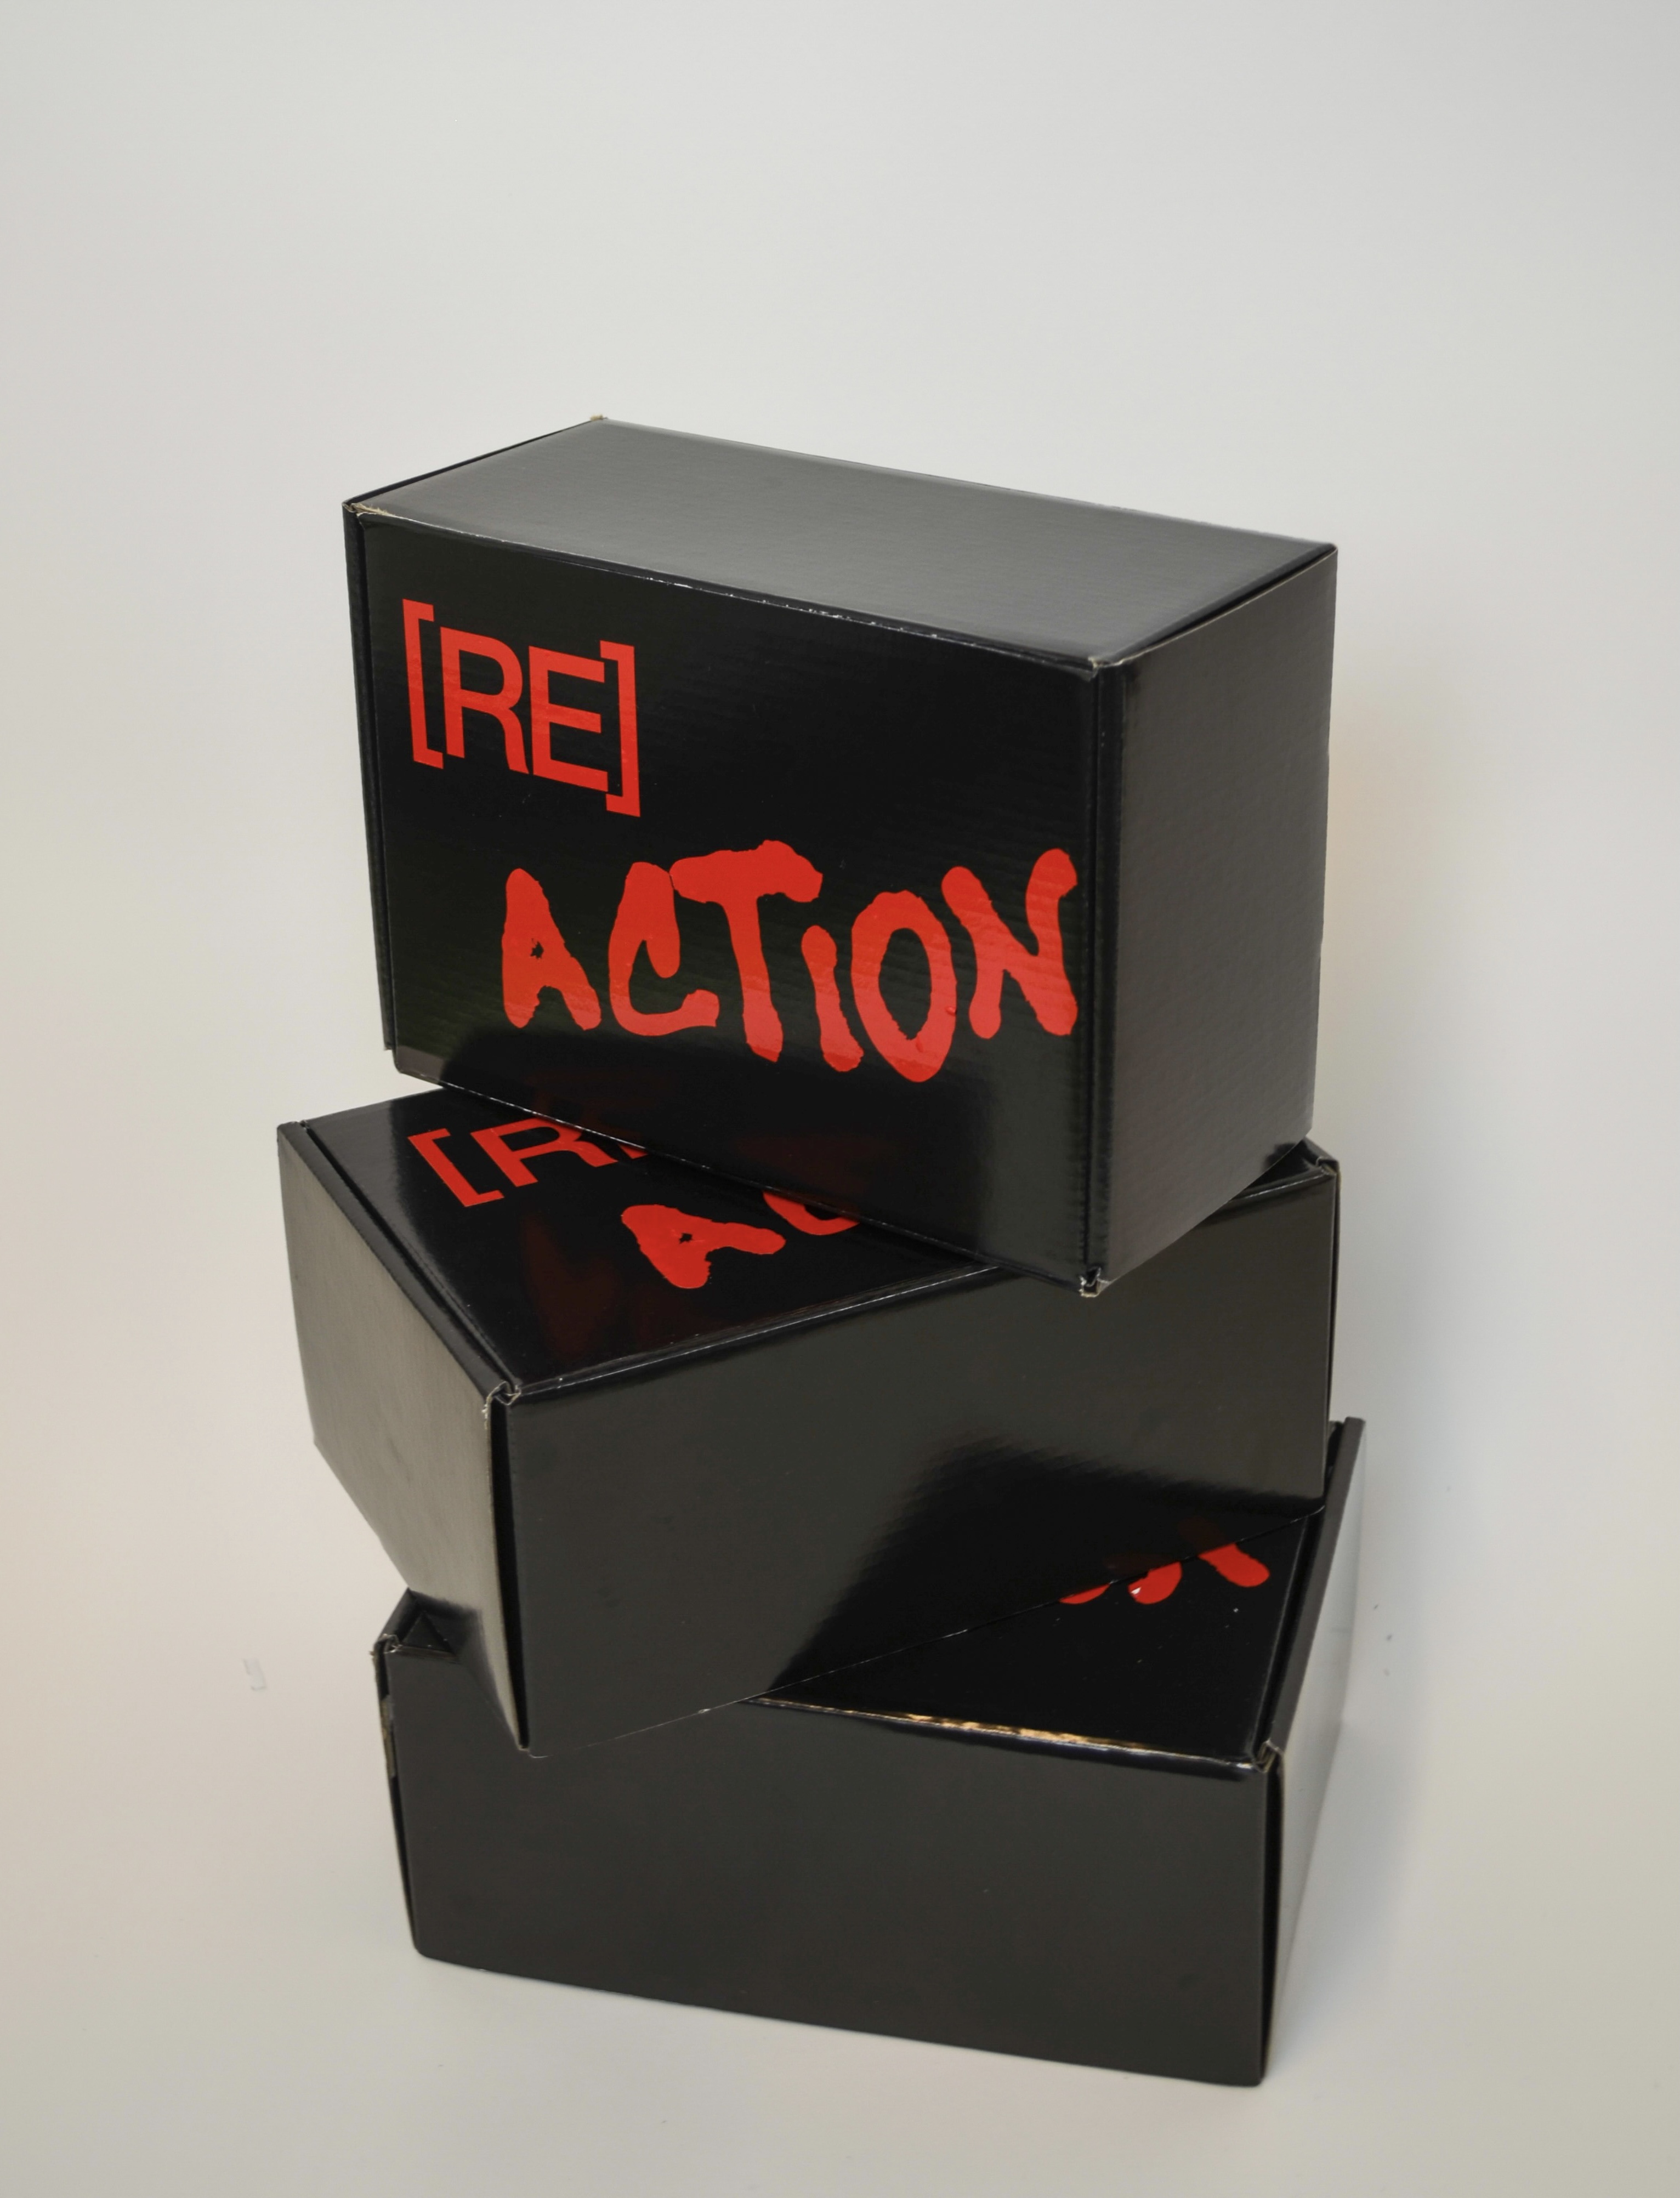 images of SNR's PR boxes